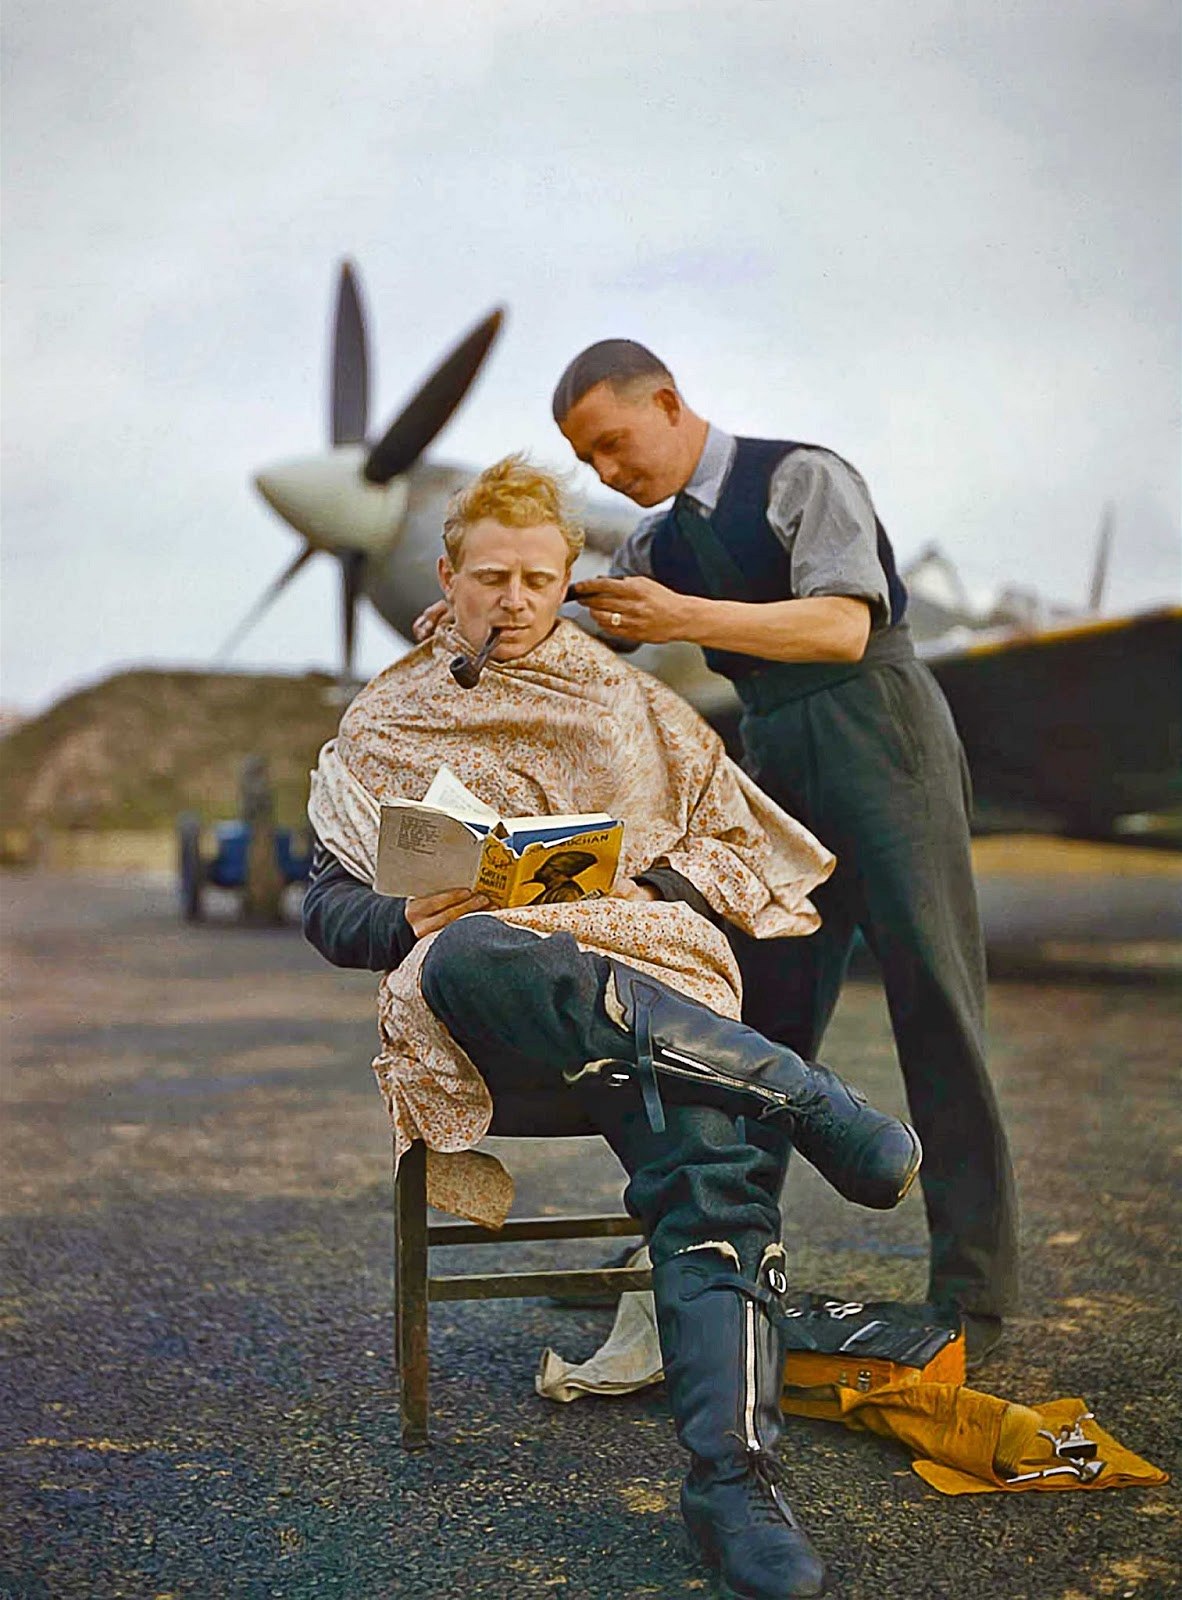 Pilot RAF si nechv mezi msiemi zastihnout vlasy.